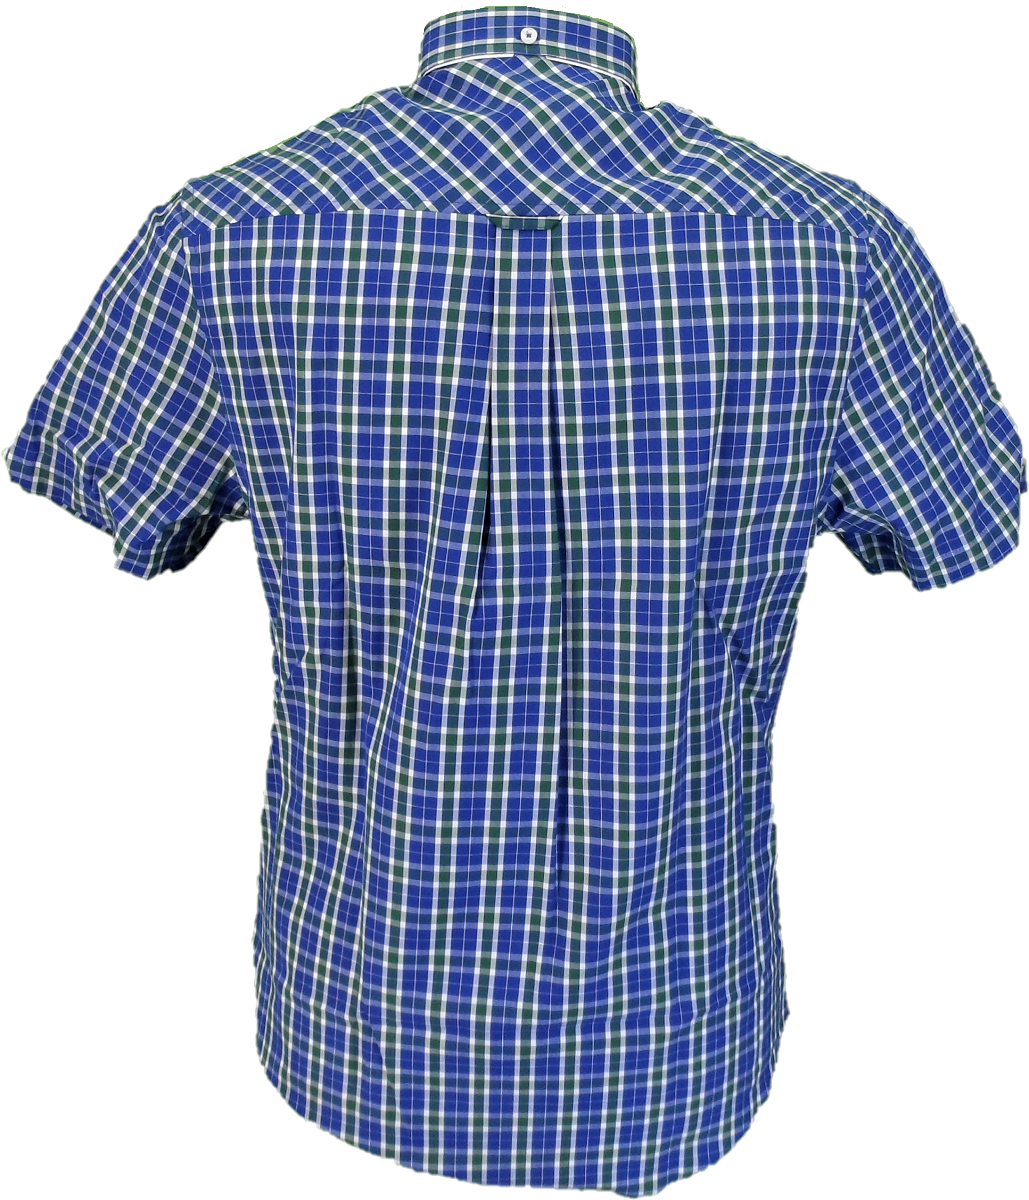 Ben Sherman Mens Blue Checked Short Sleeved Shirt